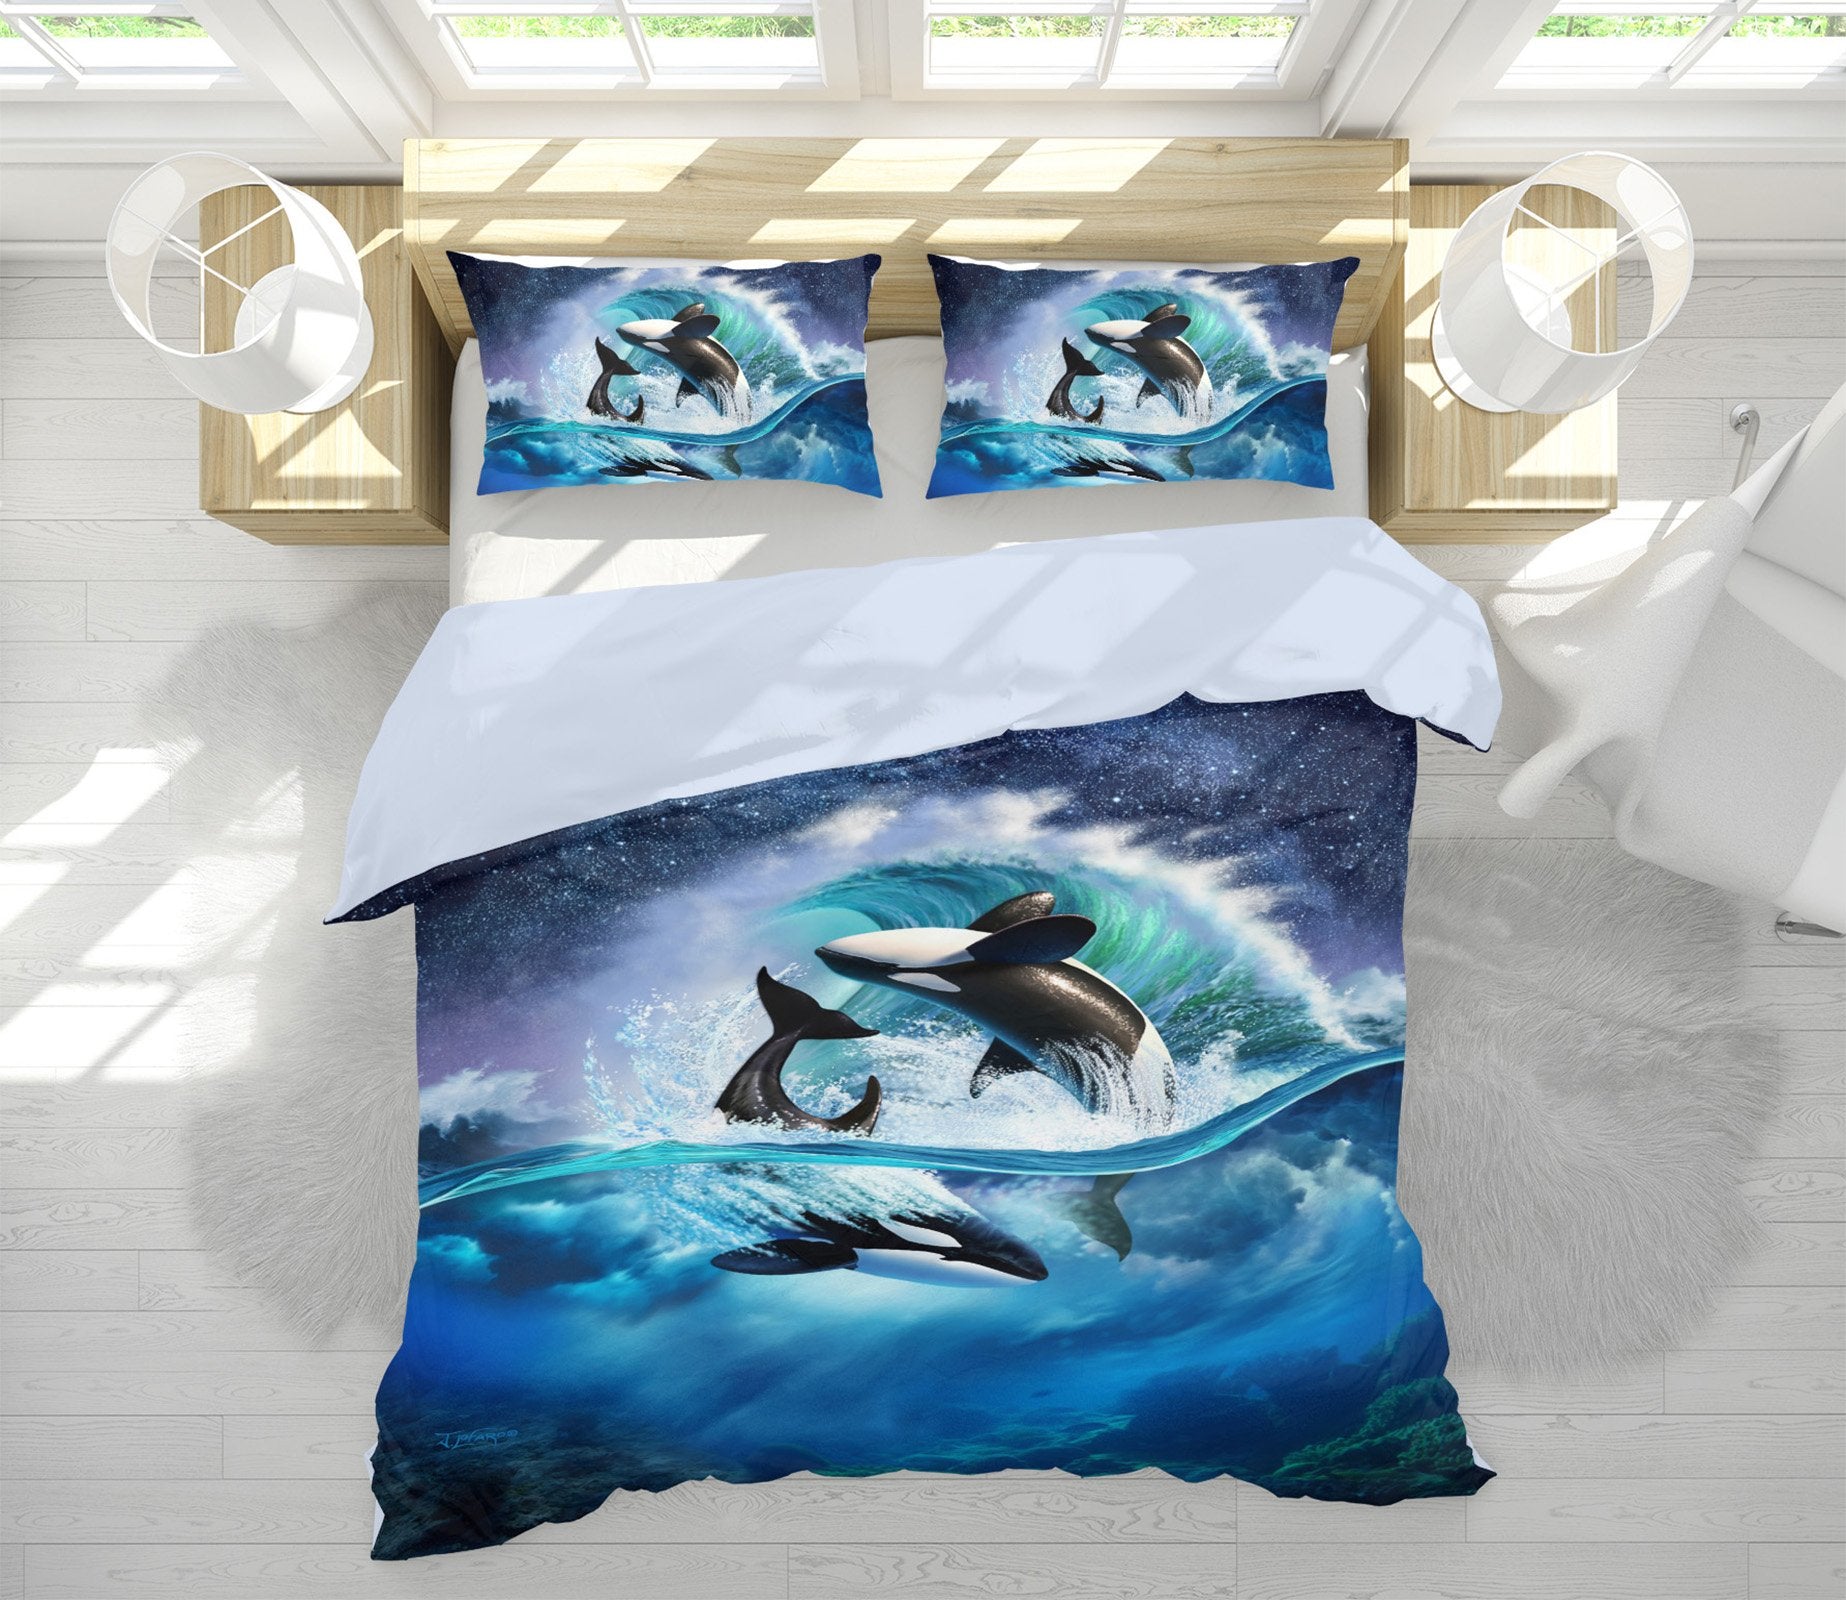 3D AOrca Wave 2128 Jerry LoFaro bedding Bed Pillowcases Quilt Quiet Covers AJ Creativity Home 